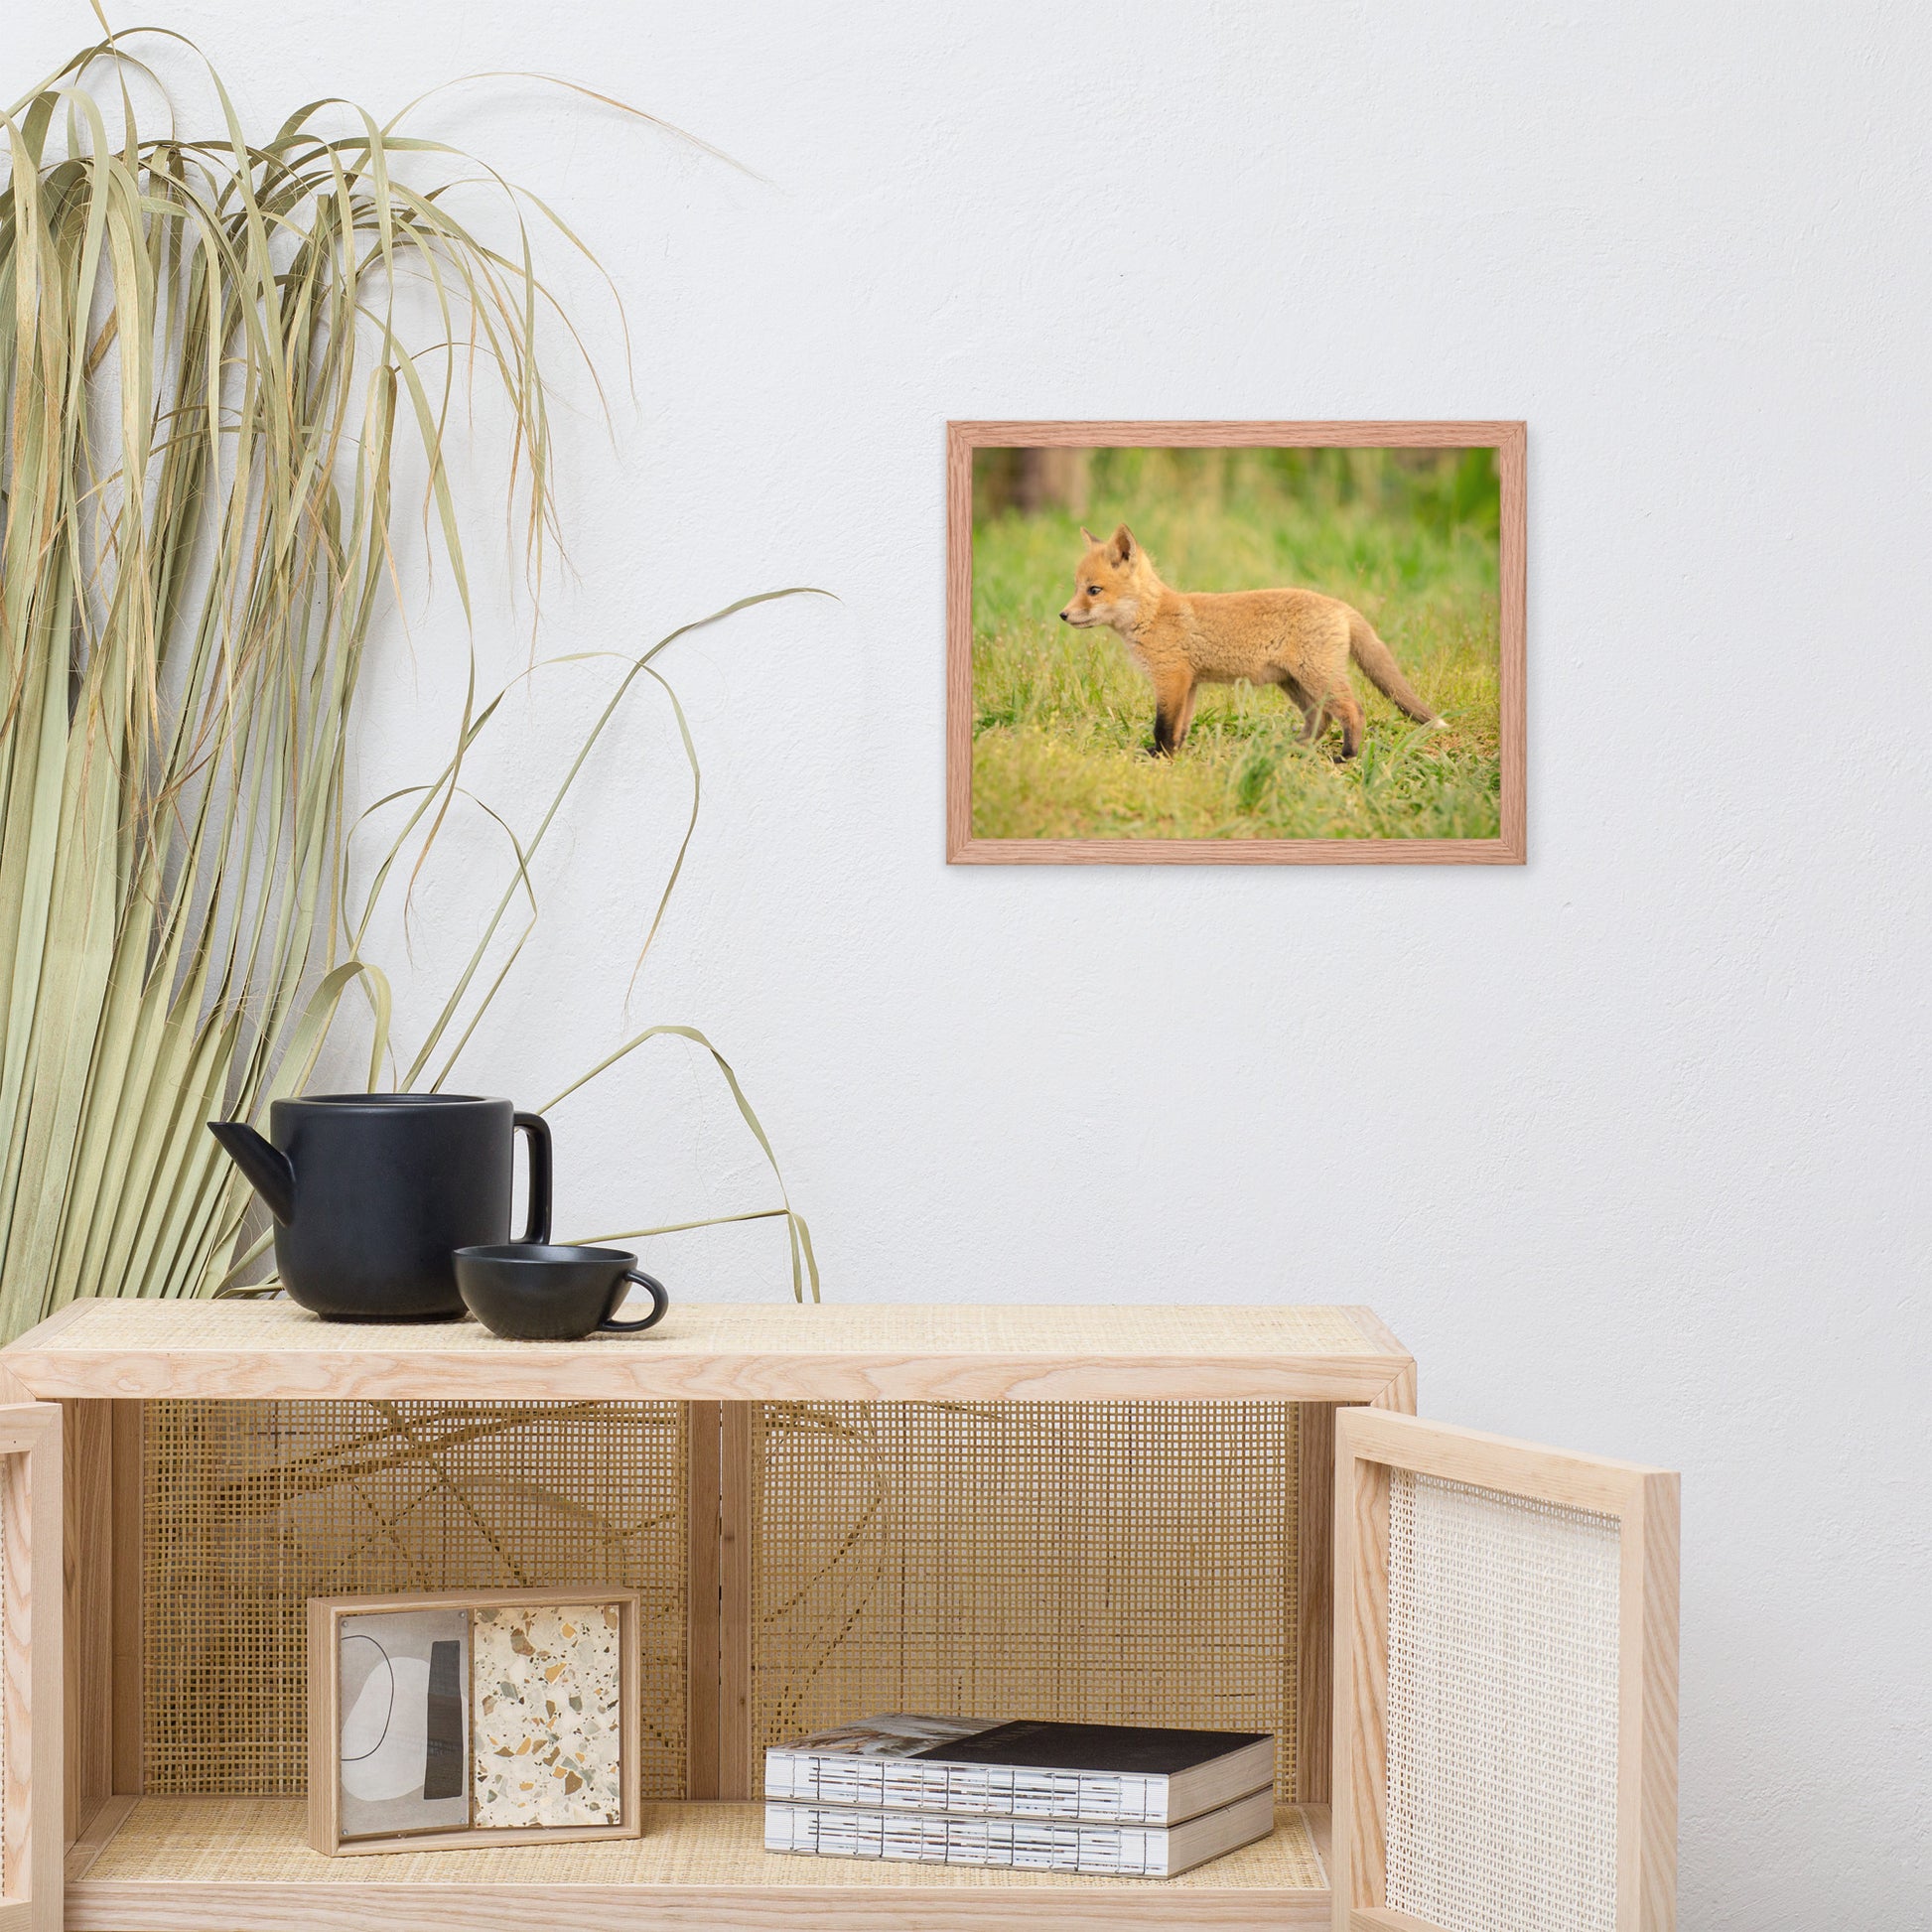 Nursery Decor Wall Art: Baby Fox Pup In Meadow/ Animal / Wildlife / Nature Photographic Artwork - Framed Artwork - Wall Decor